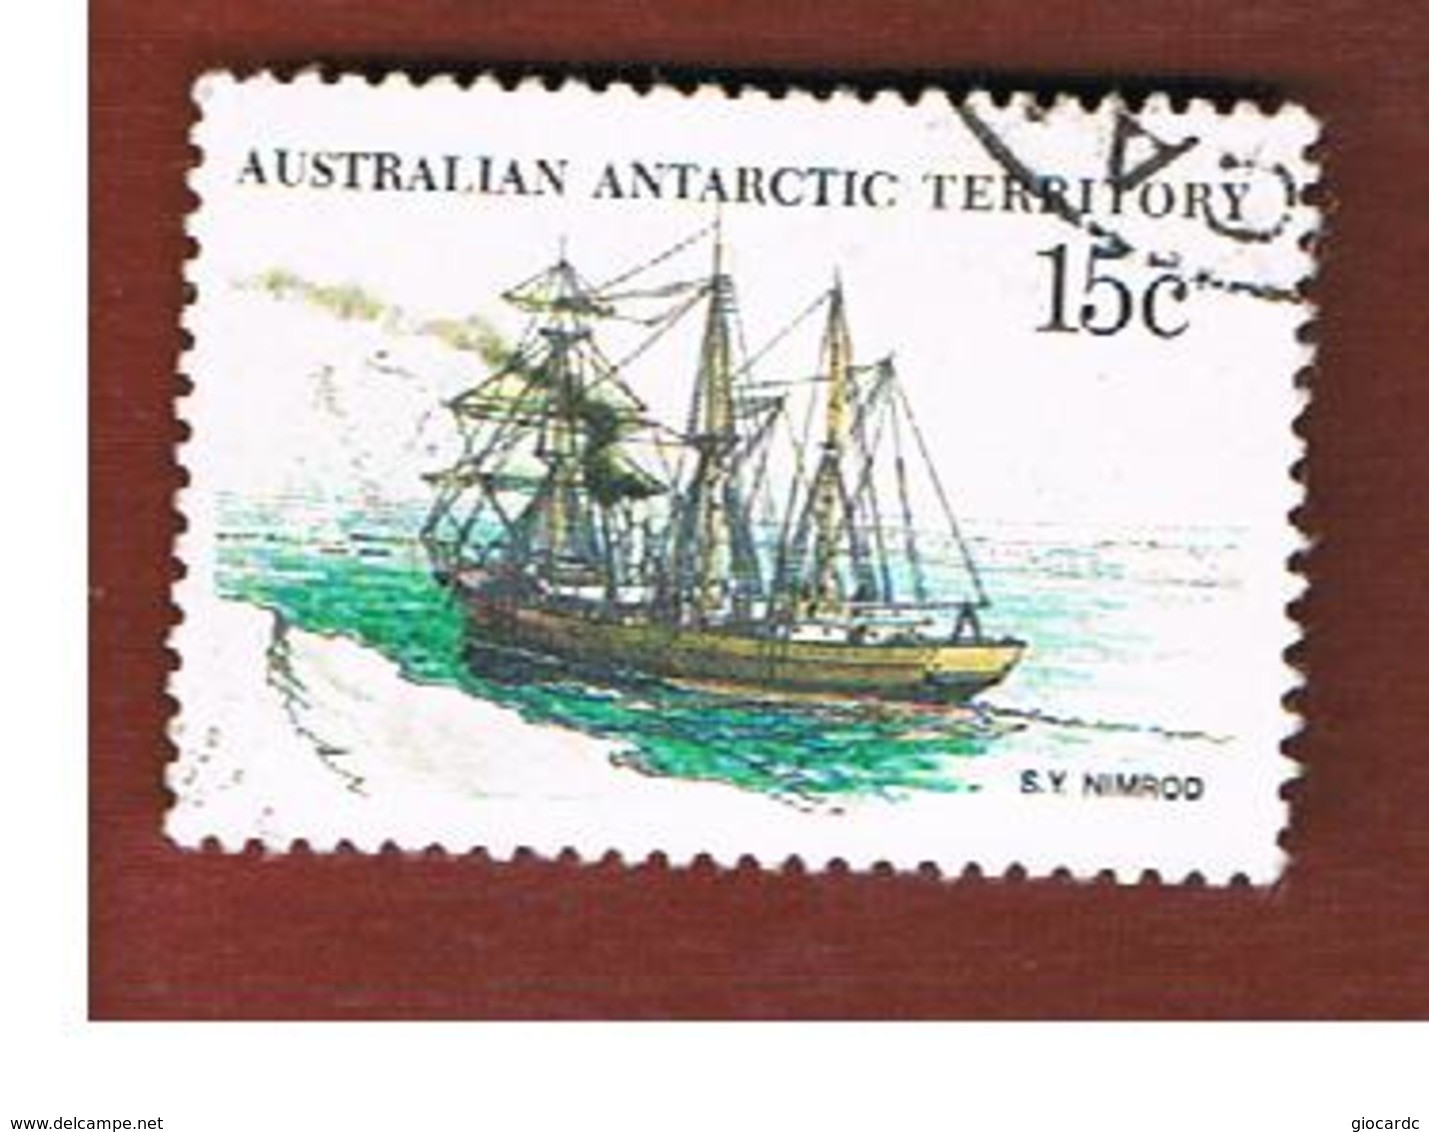 TERRITORI ANTARTICI AUSTRALIANI (AAT AUSTRALIAN ANTARCTIC TERRITORY) SG 42 - 1981 SHIPS: NIMROD   -  USED - Oblitérés